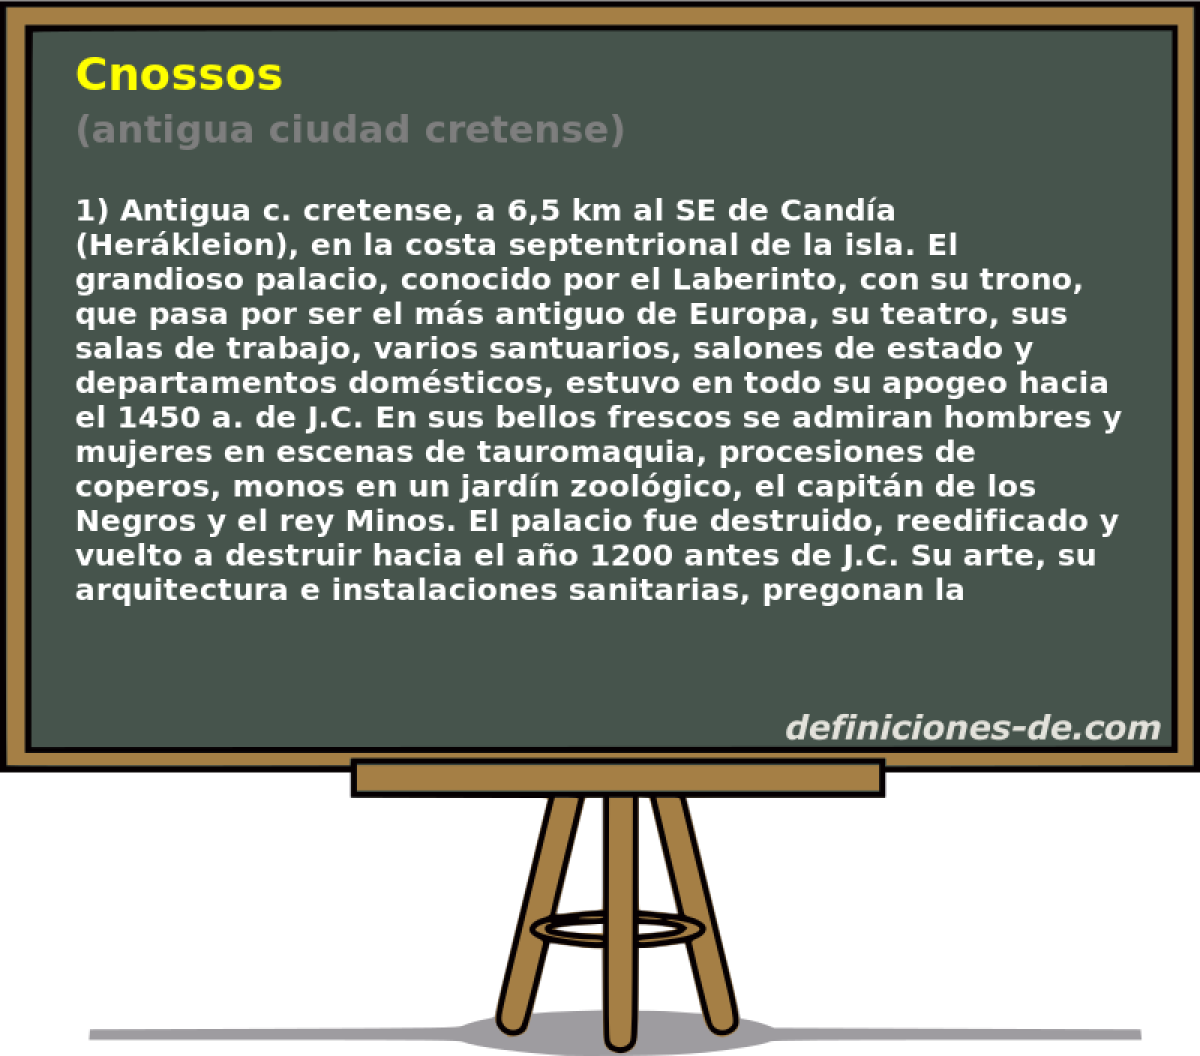 Cnossos (antigua ciudad cretense)